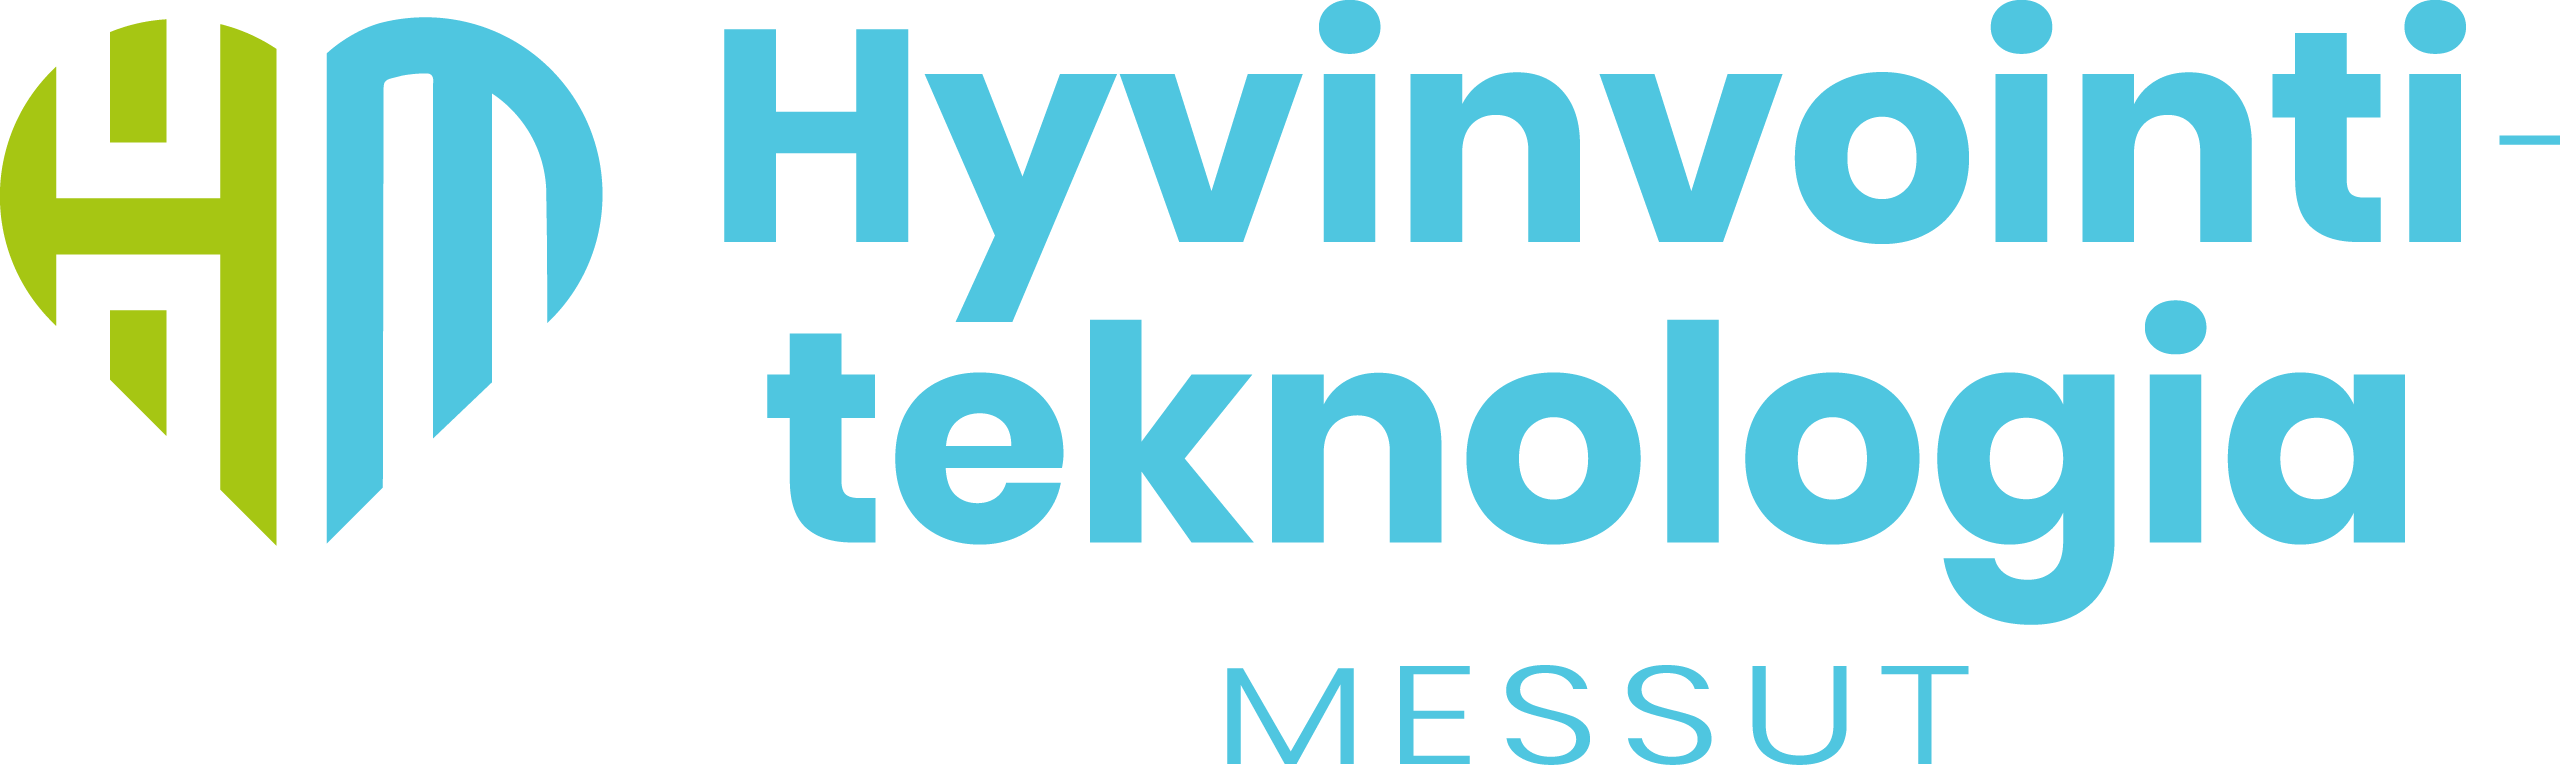 Hyvinvointiteknologiamessut logo